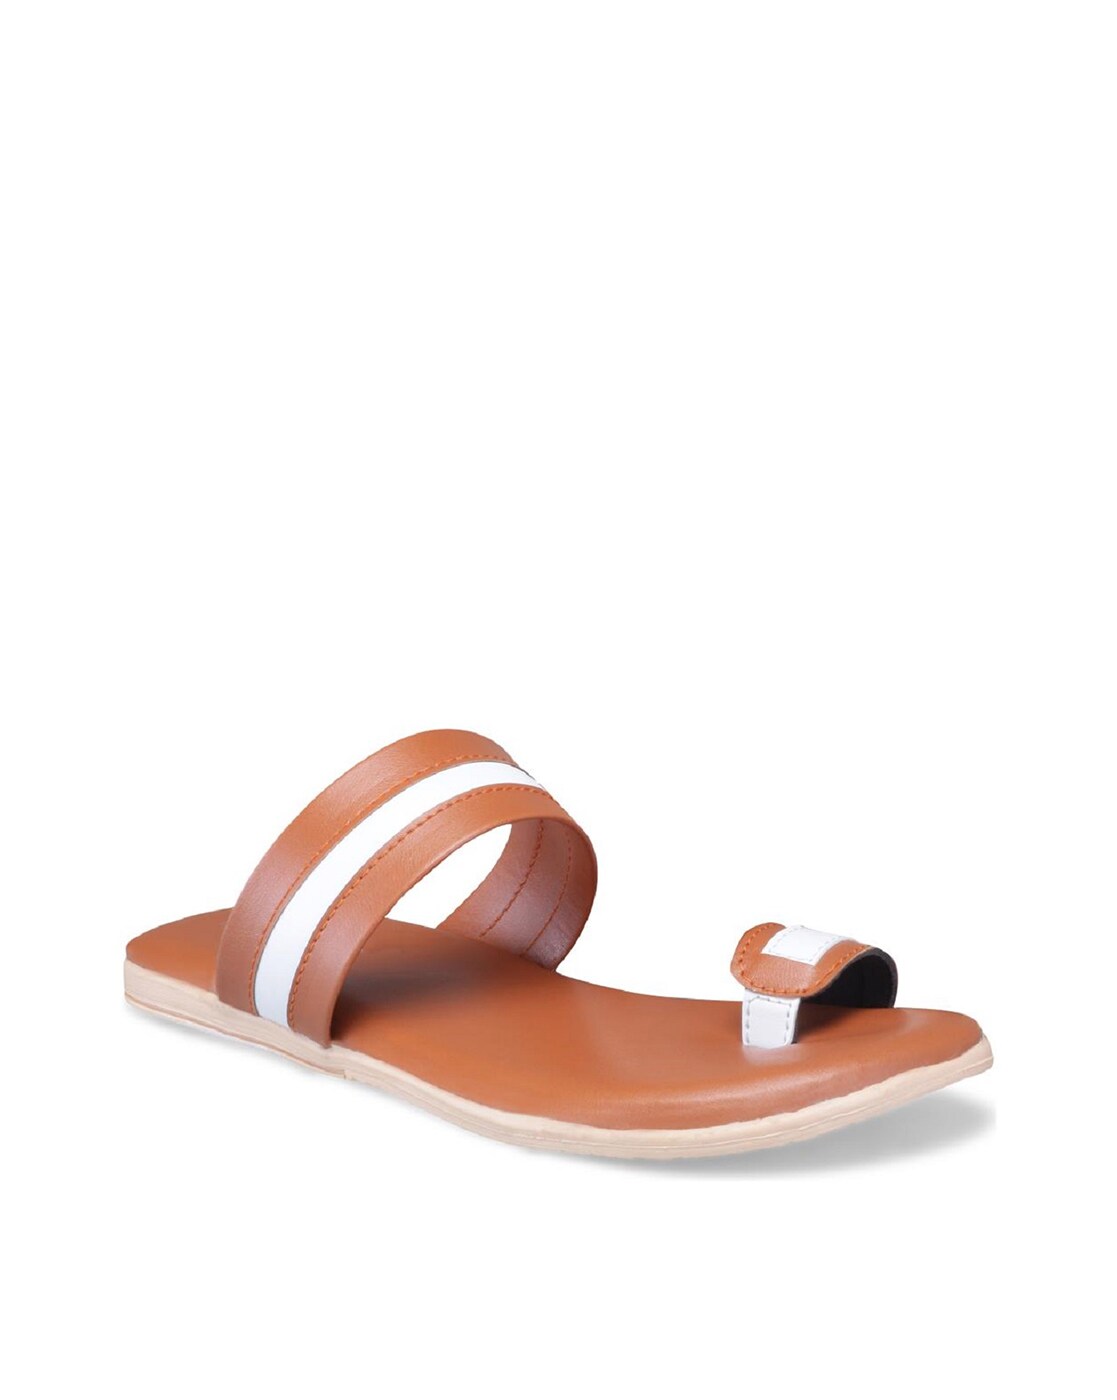 Buy Tan Brown Sandals for Men by 